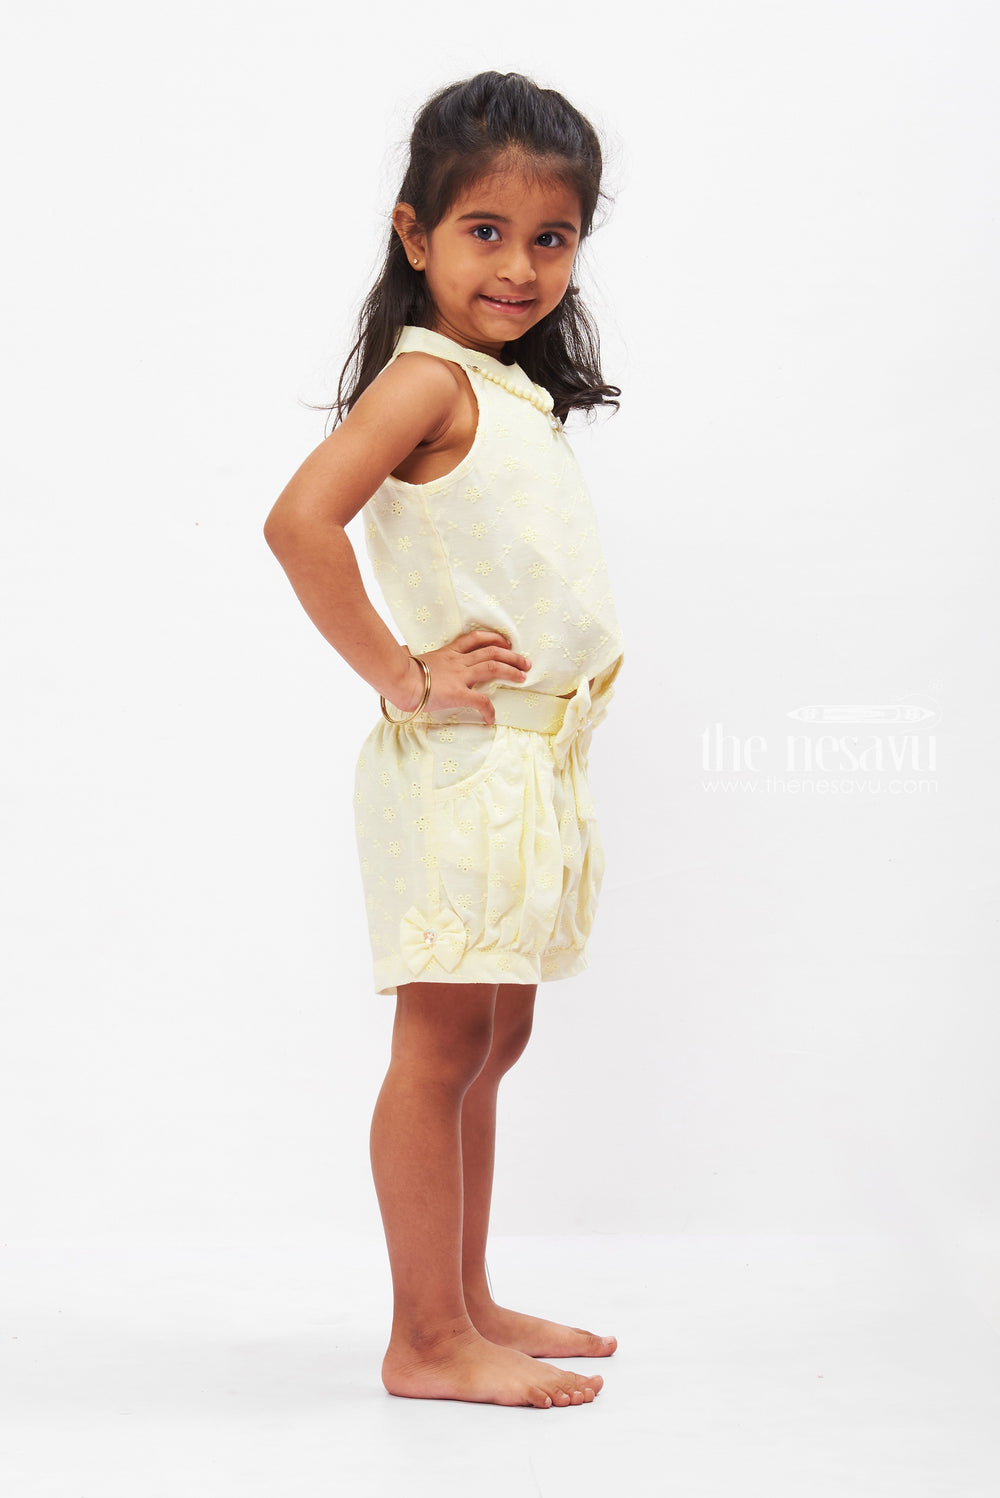 The Nesavu Baby Casual Sets Charming Yellow Floral Top and Shorts Set for Girls Nesavu Girls Floral Top Shorts Set | Playful Yellow Outfit | Kids Summer Fashion | The Nesavu